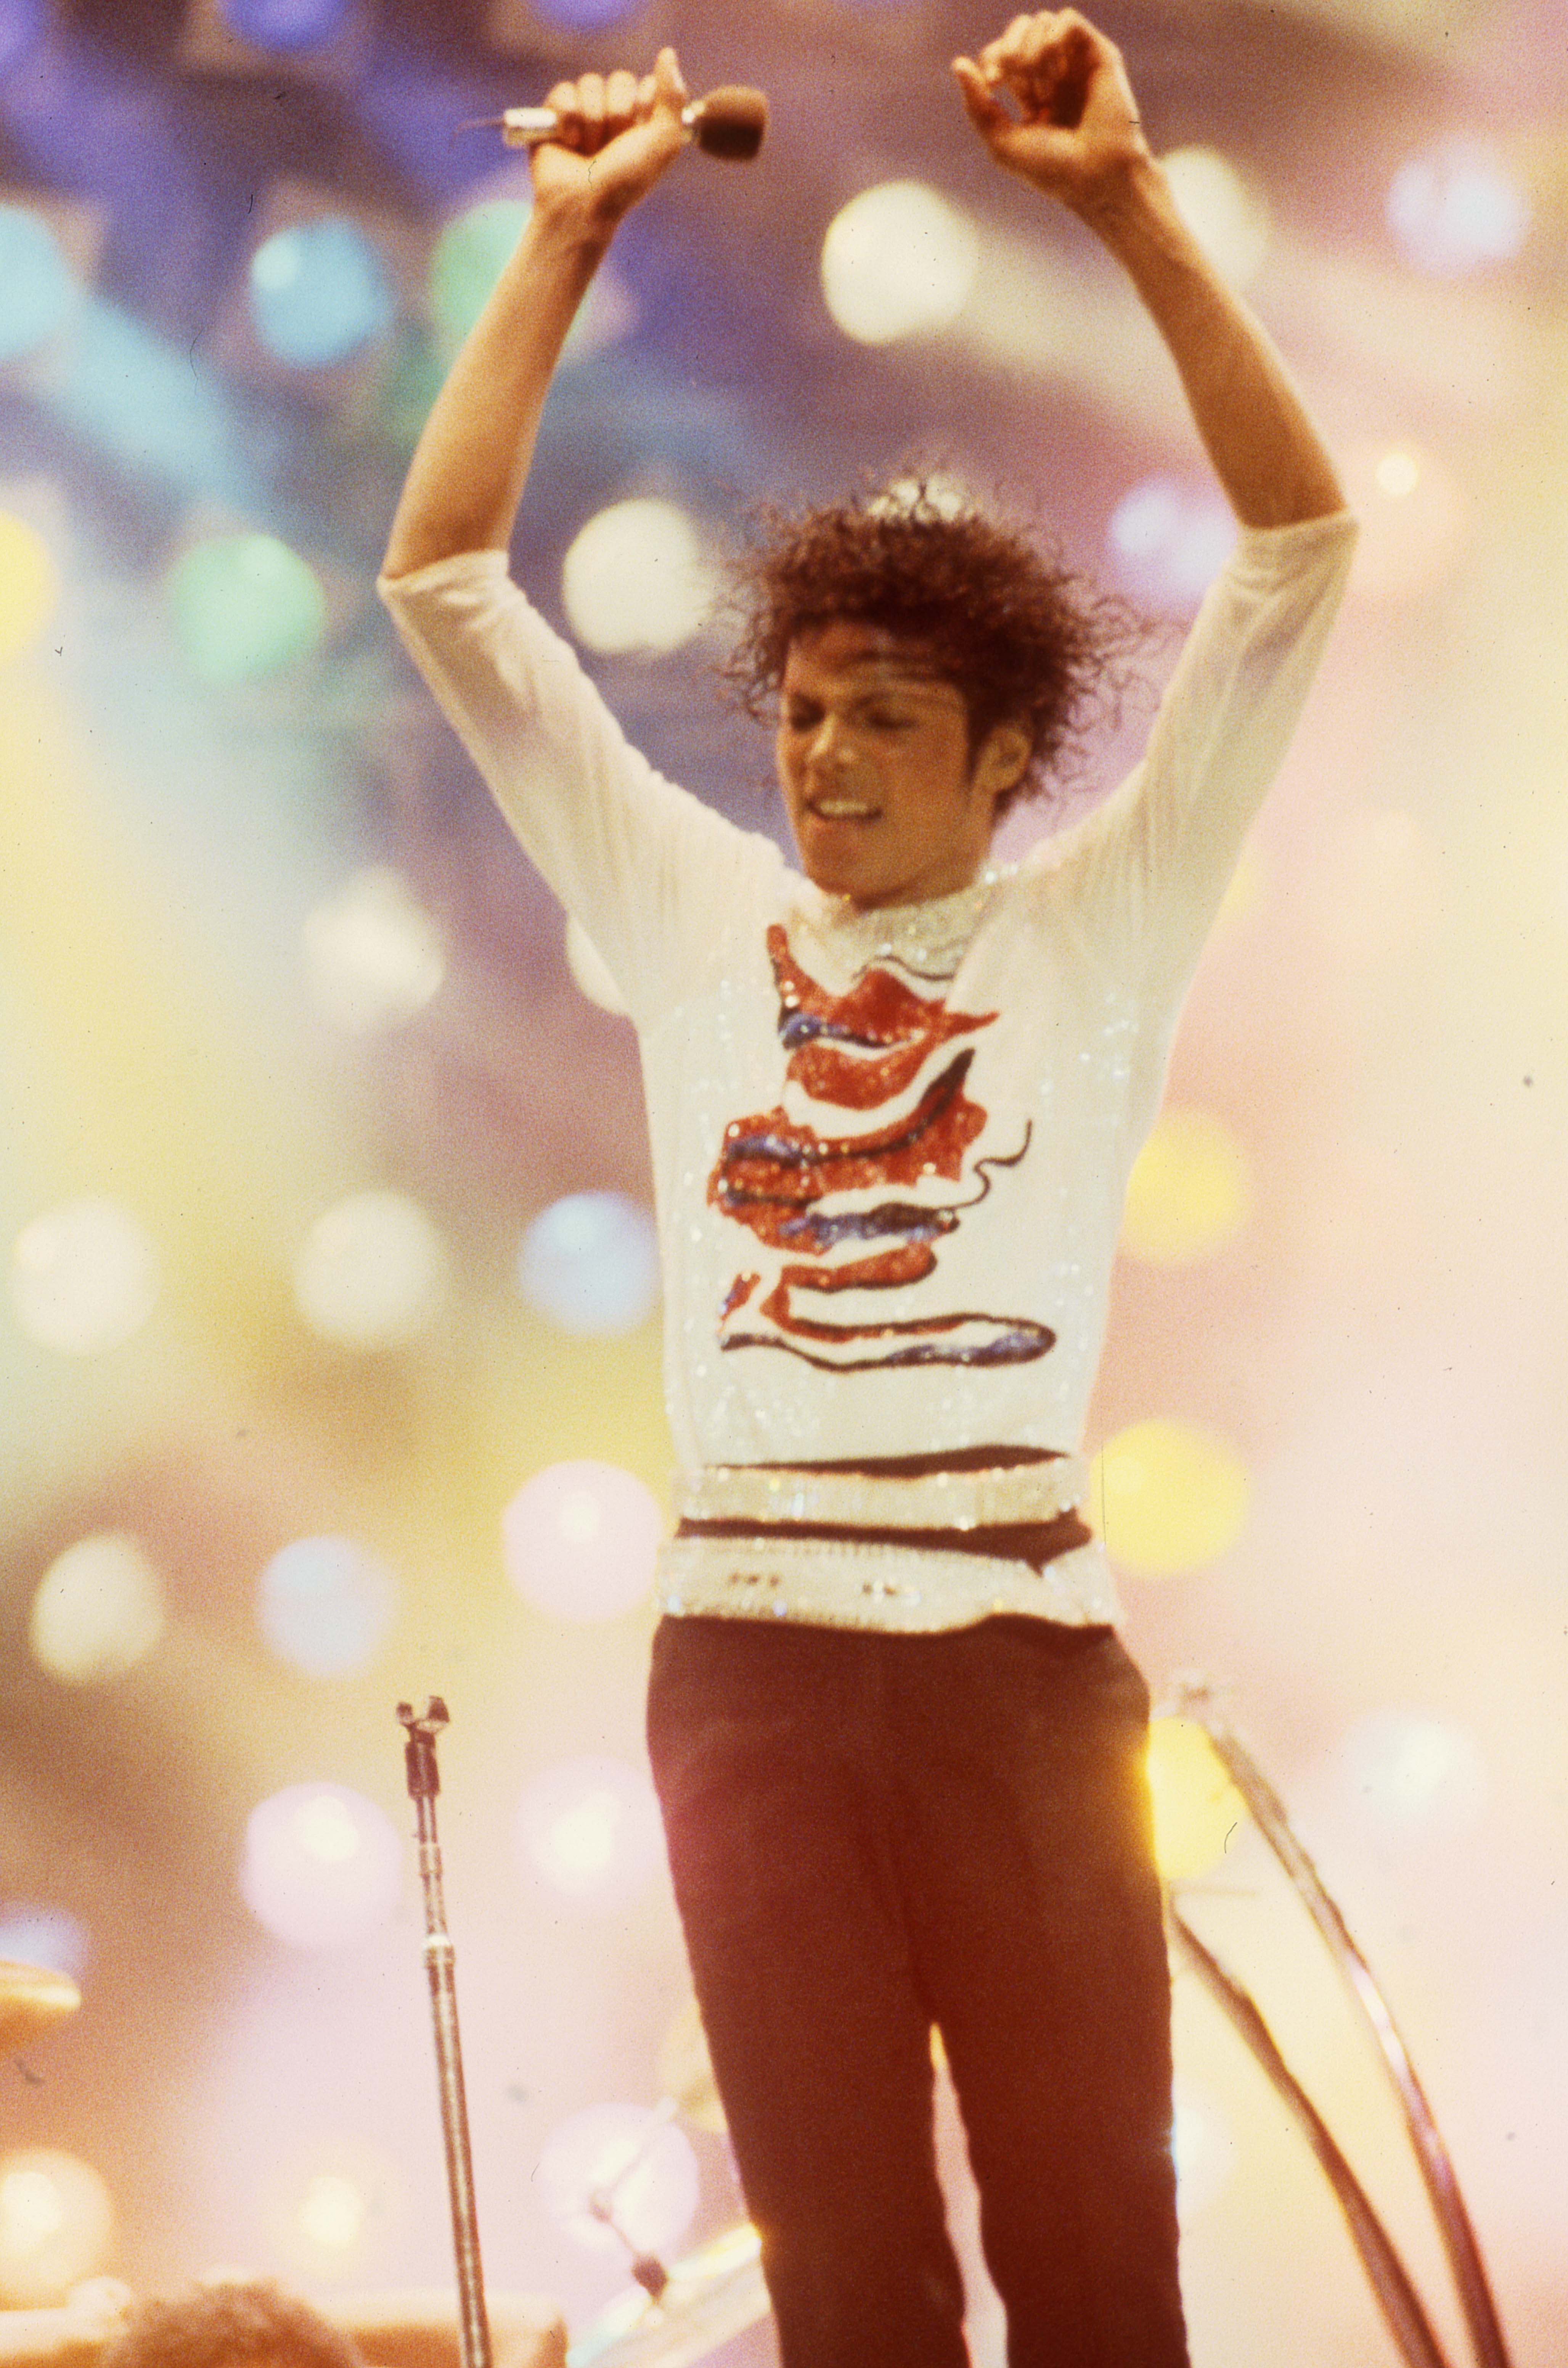 Michael Jackson receives an award during his Victory Tour circa 1984.